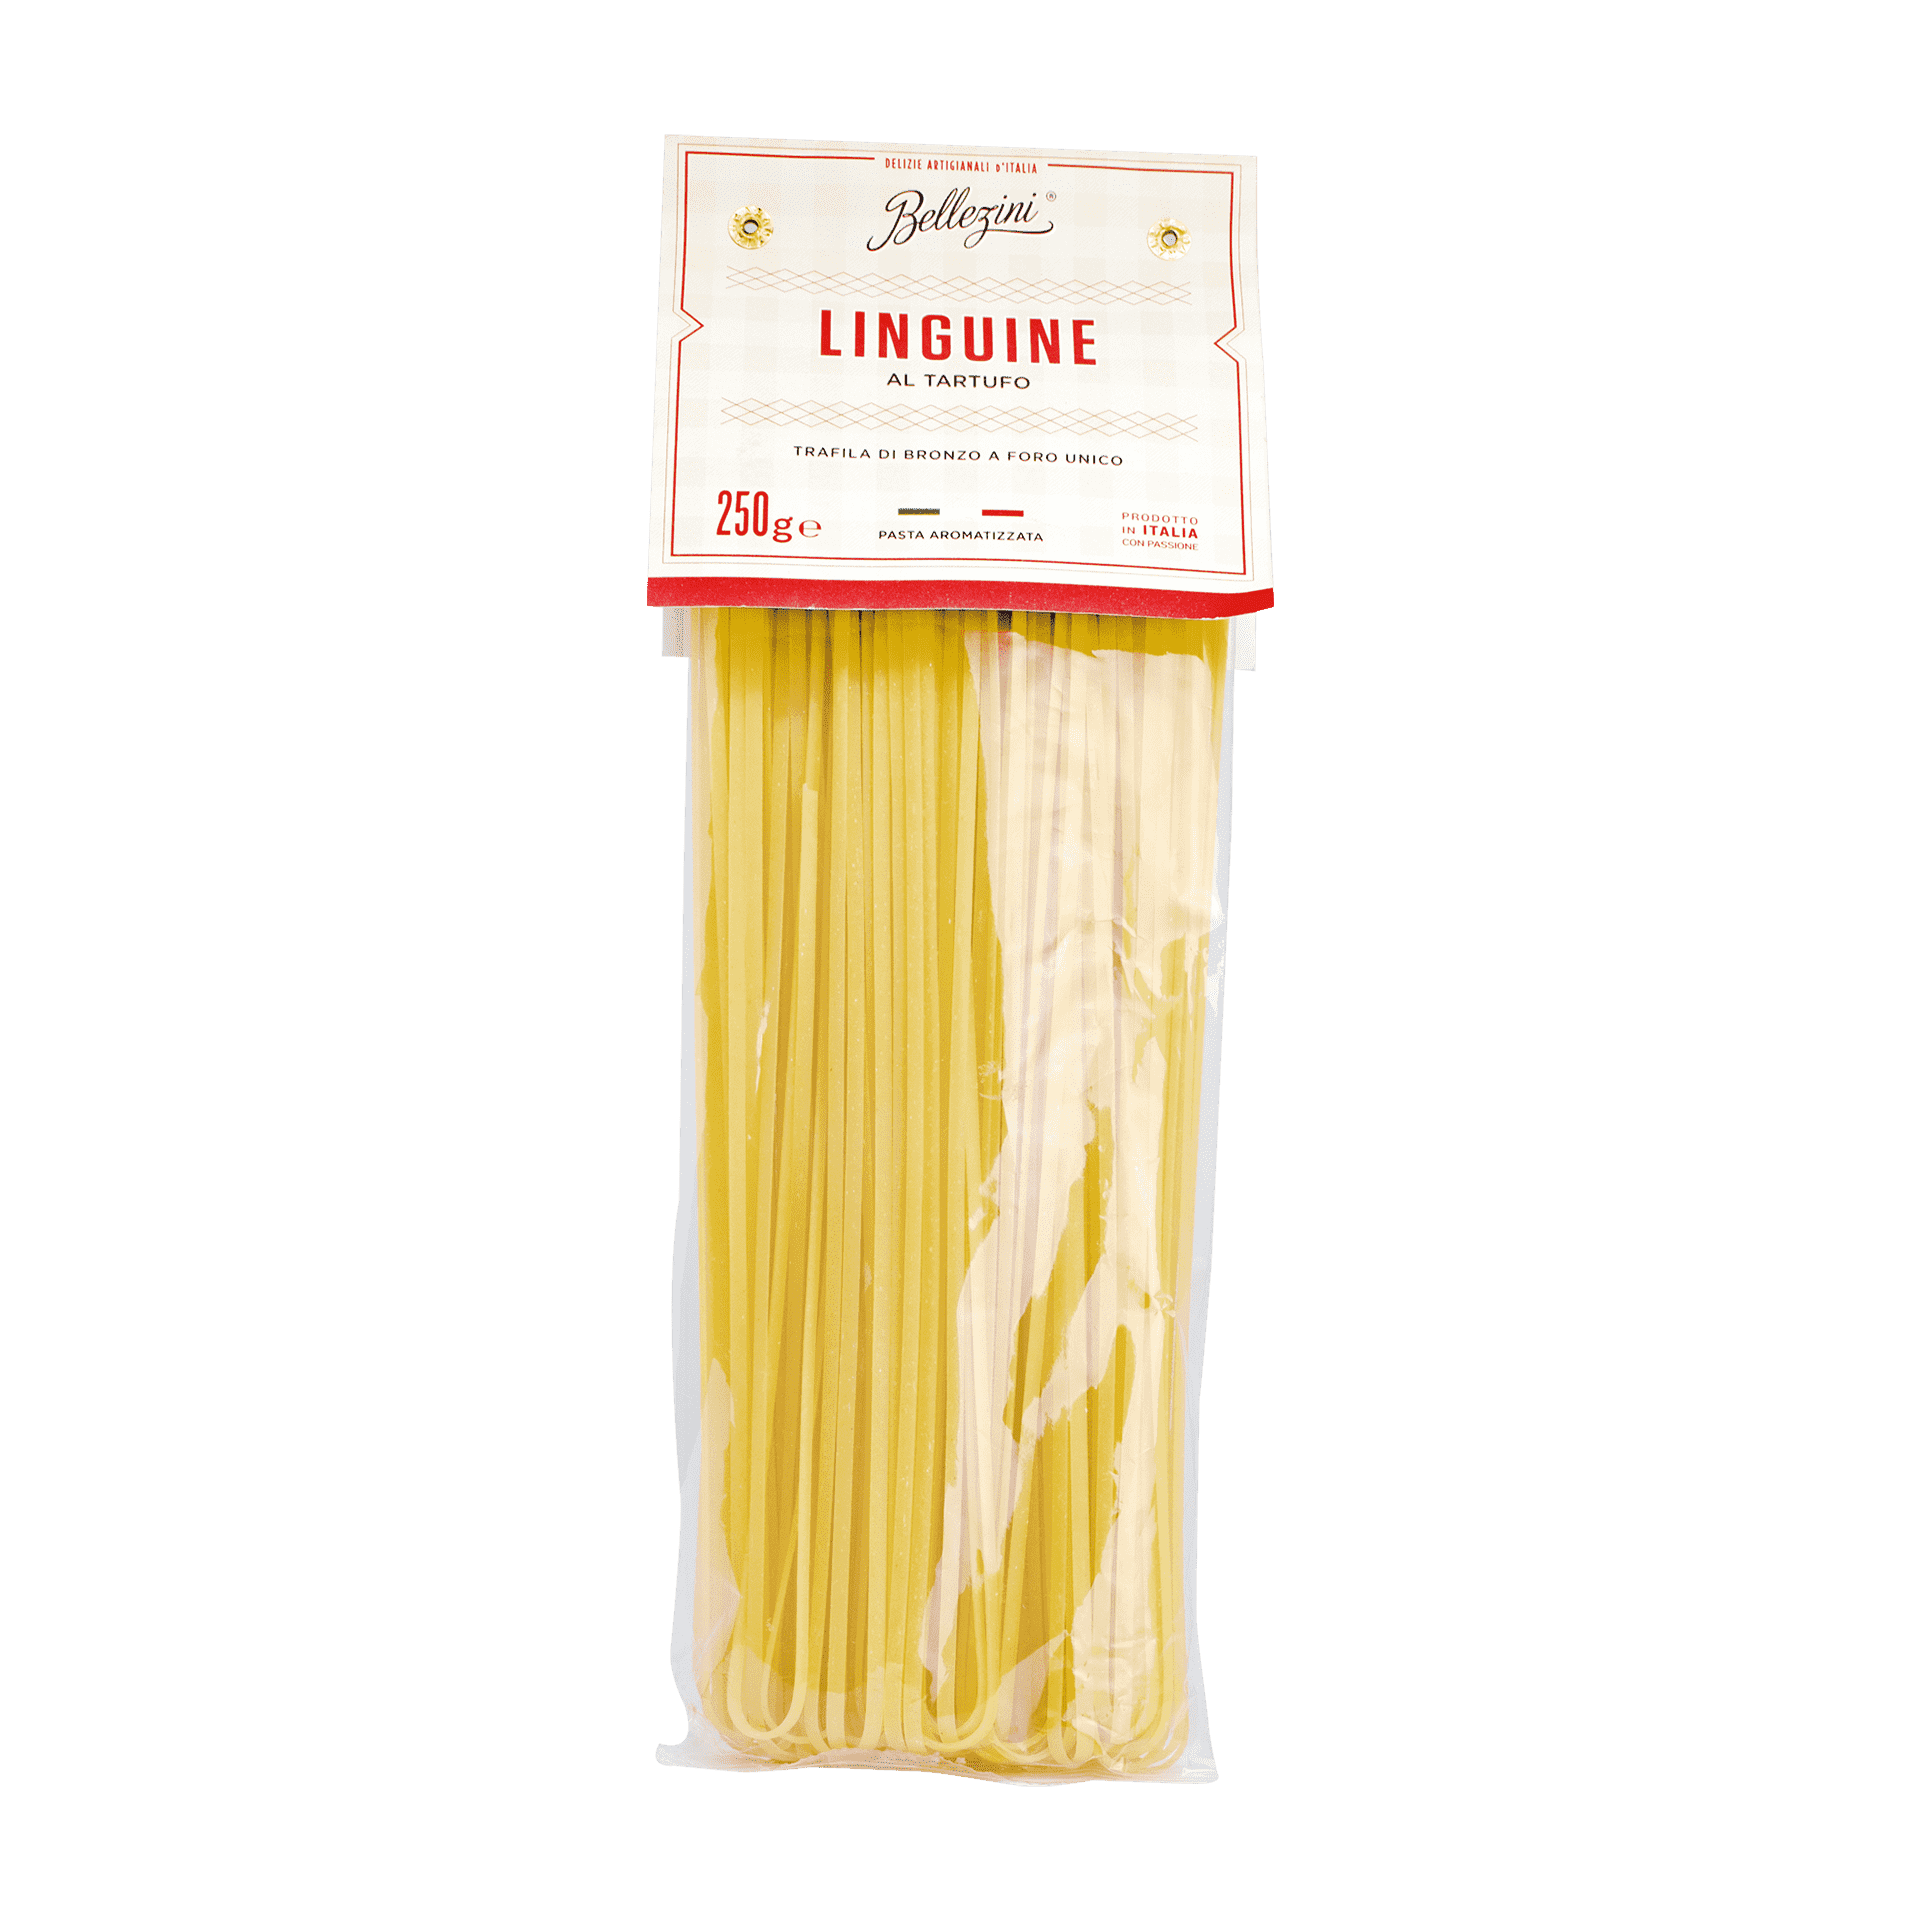 Linguine al Tartufo - Original italienische Pasta mit Trüffel